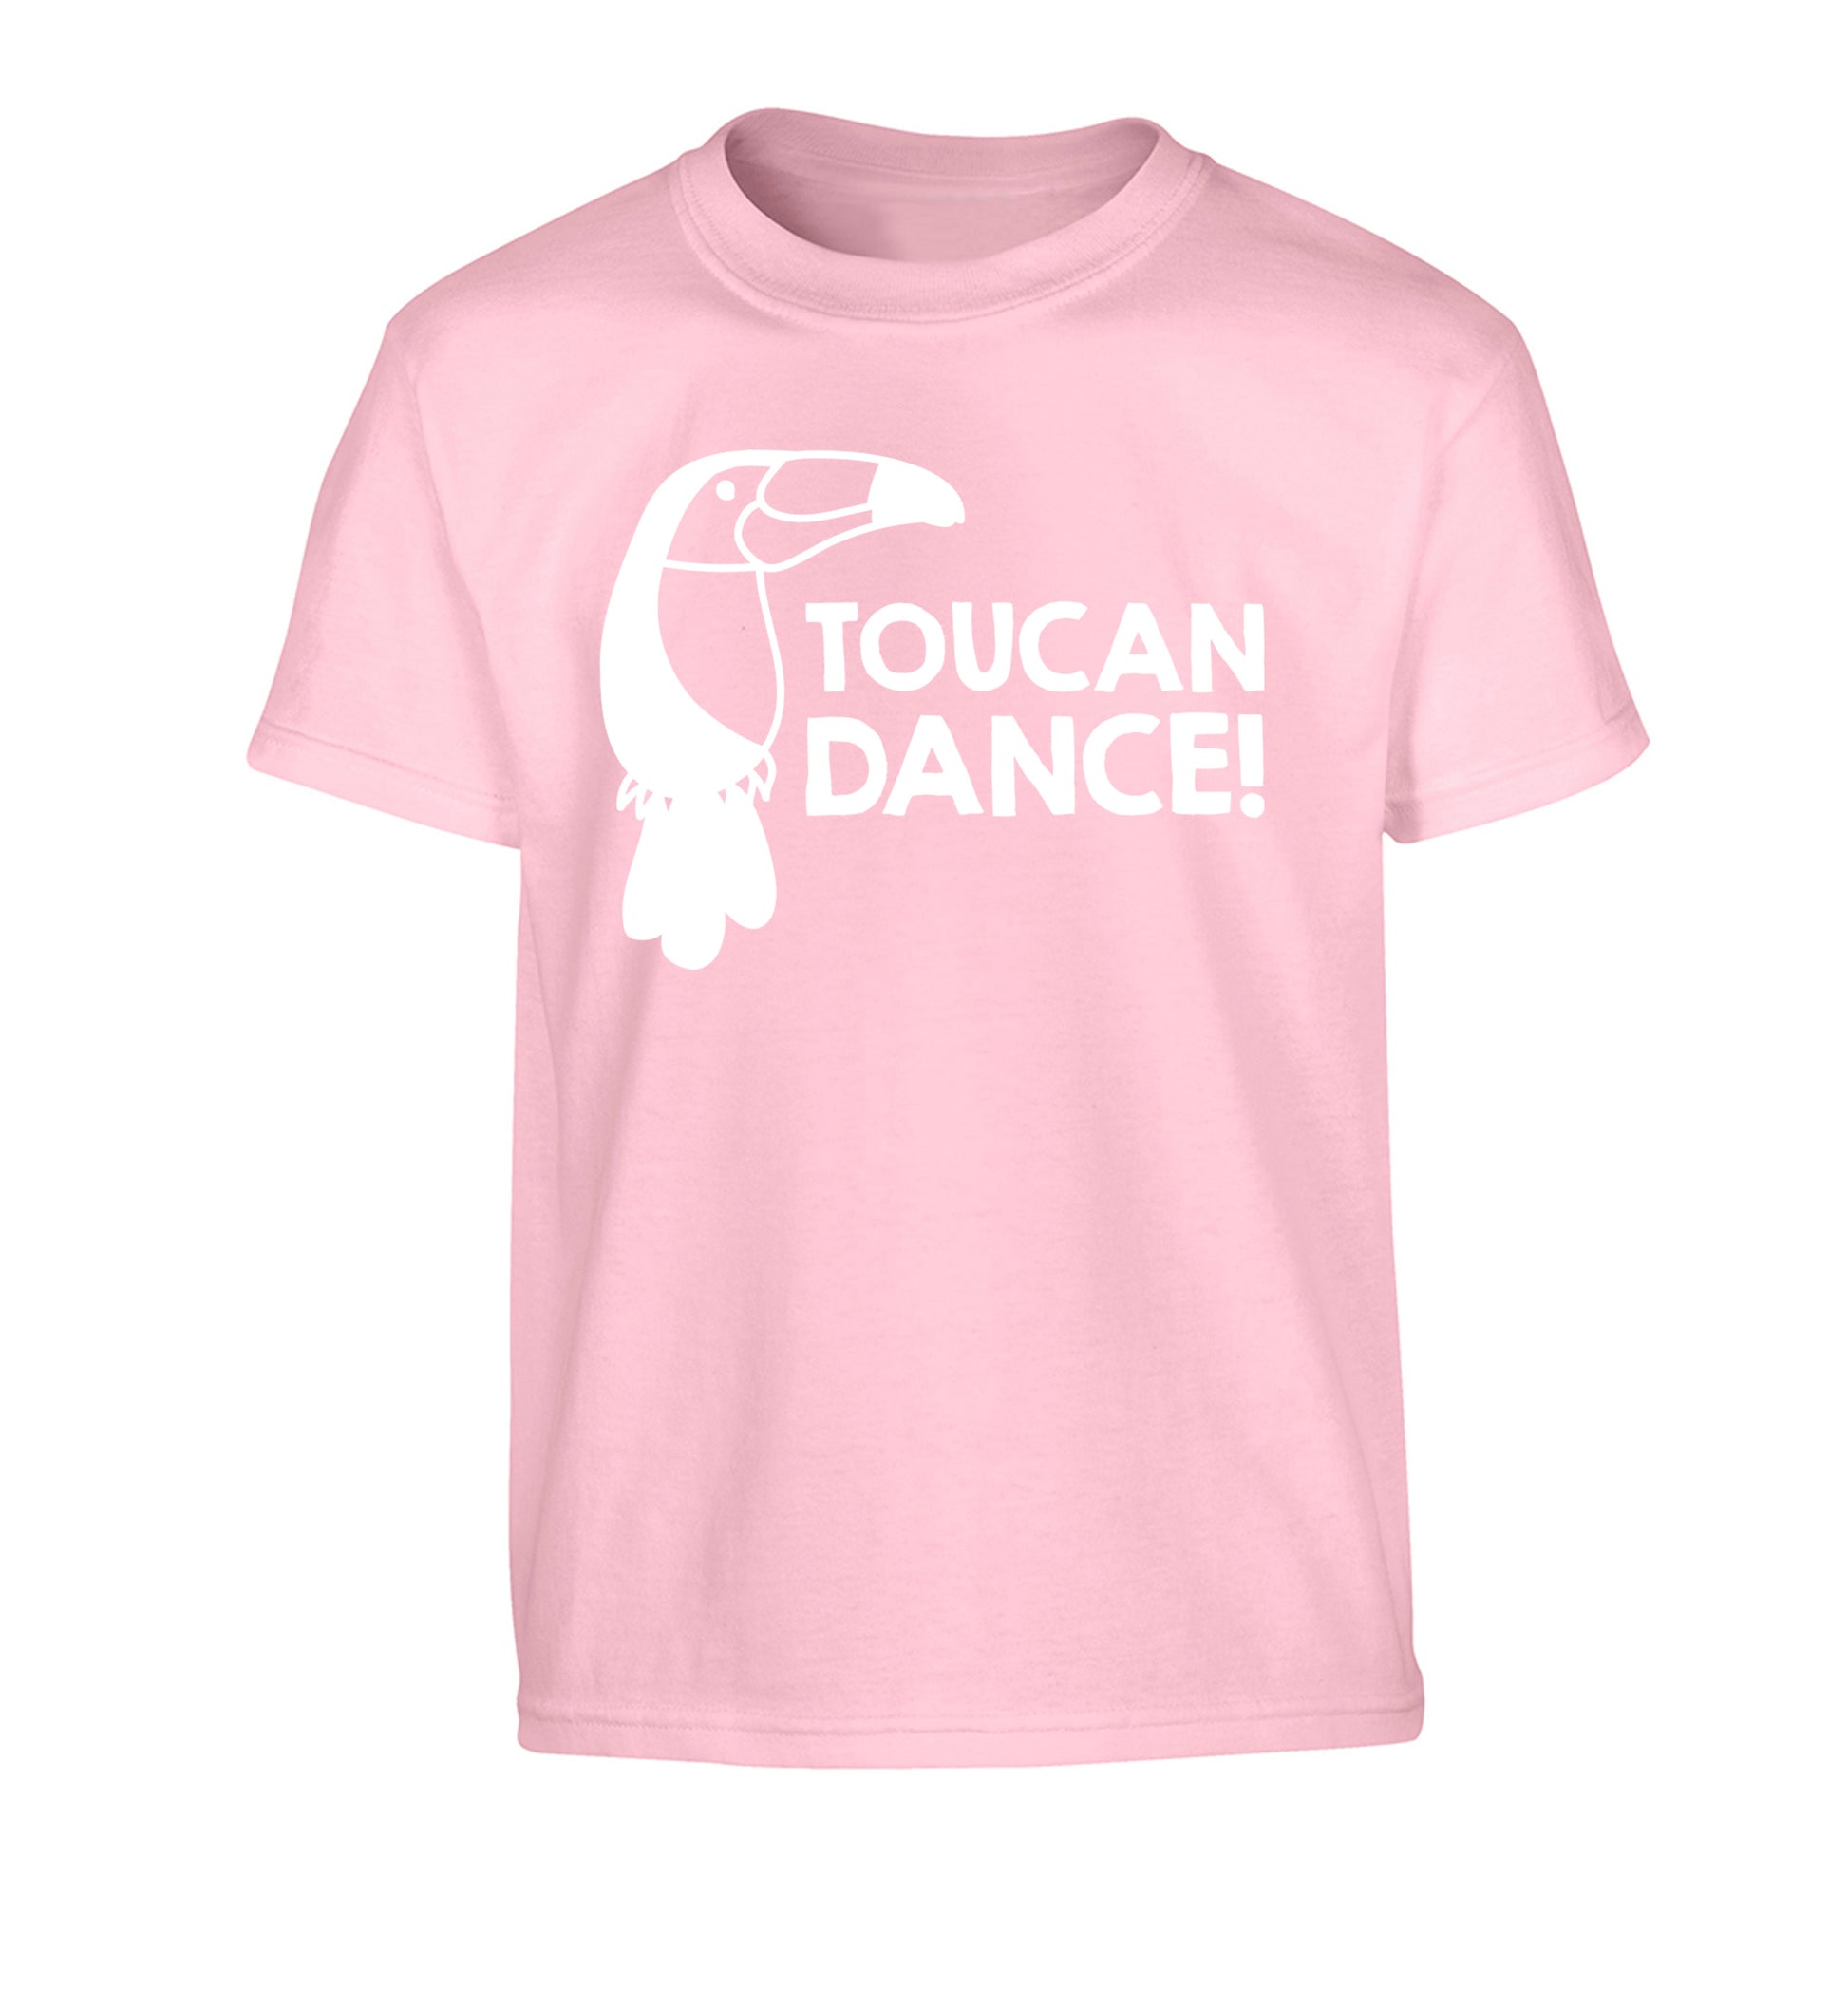 Toucan dance Children's light pink Tshirt 12-13 Years